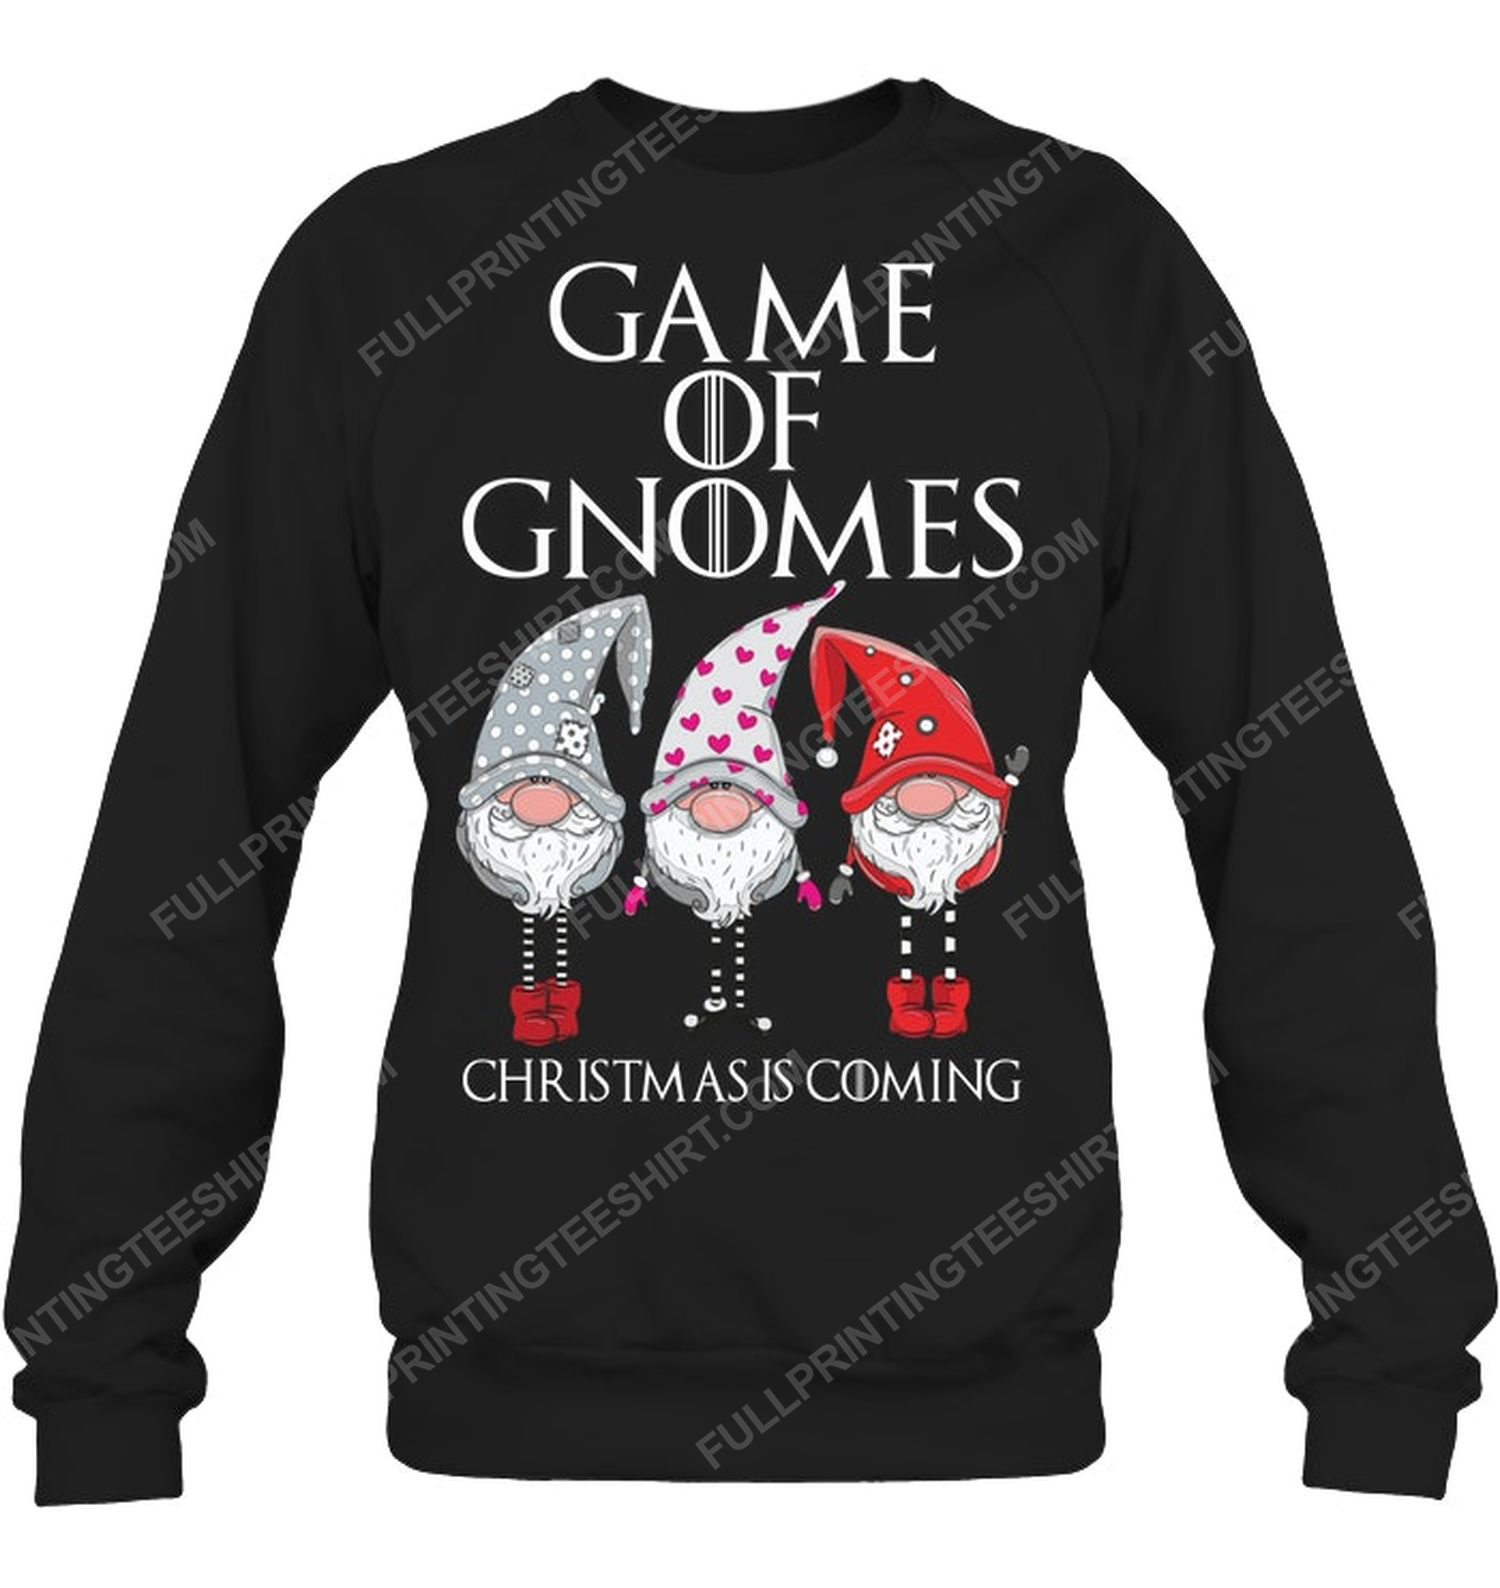 Game of gnomes christmas is coming sweatshirt